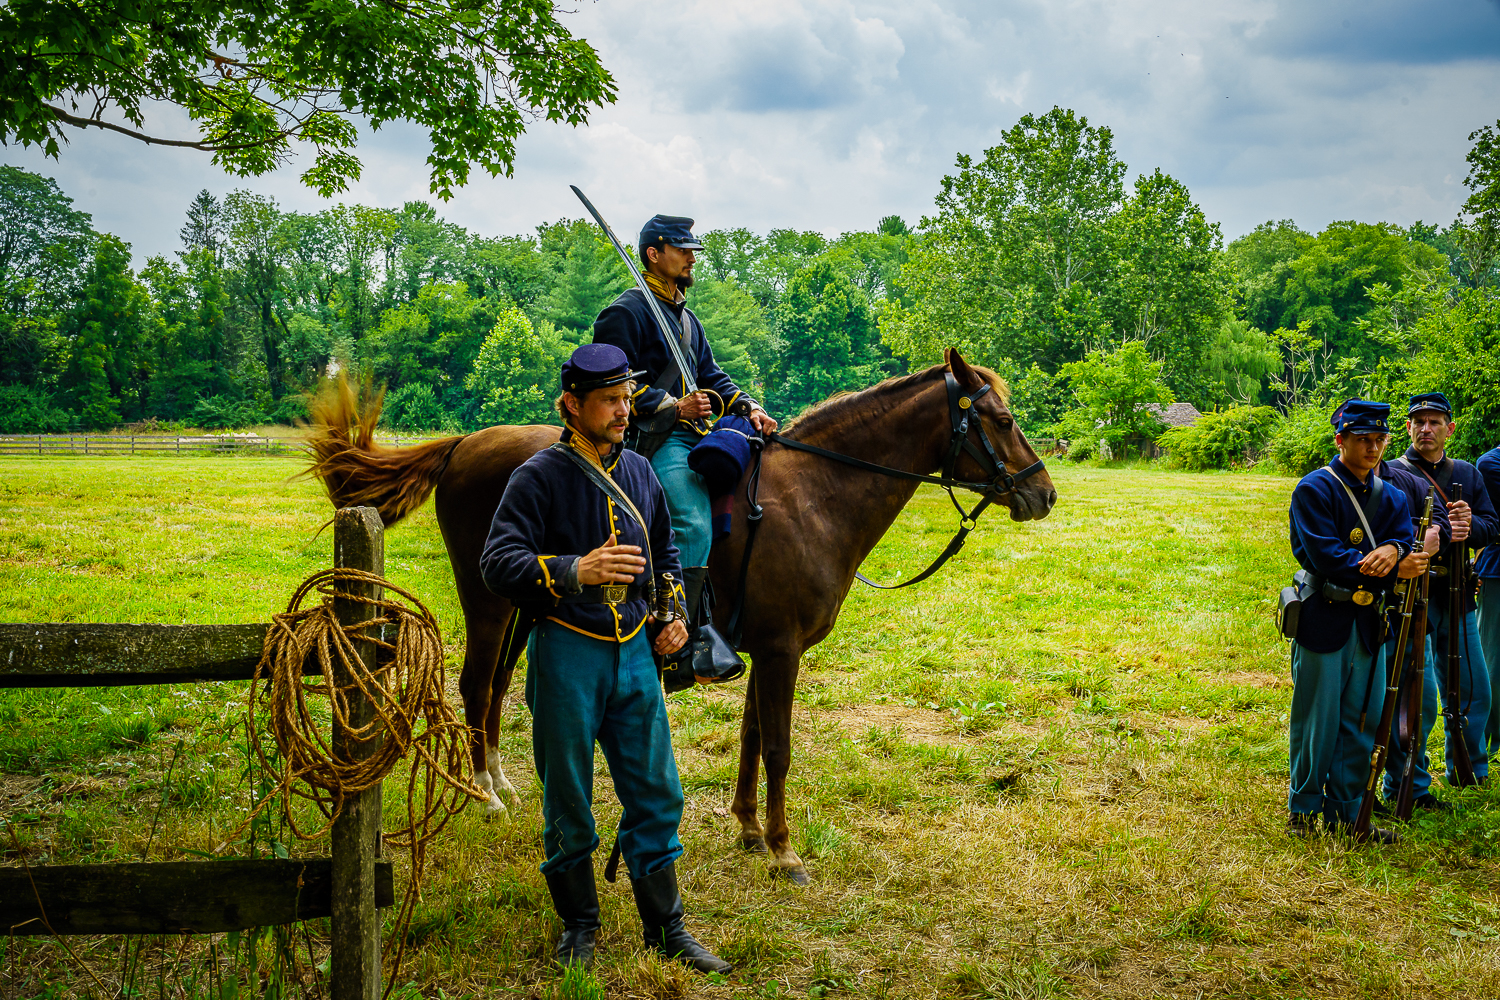 Union Cavalry at Landis Valley Museum